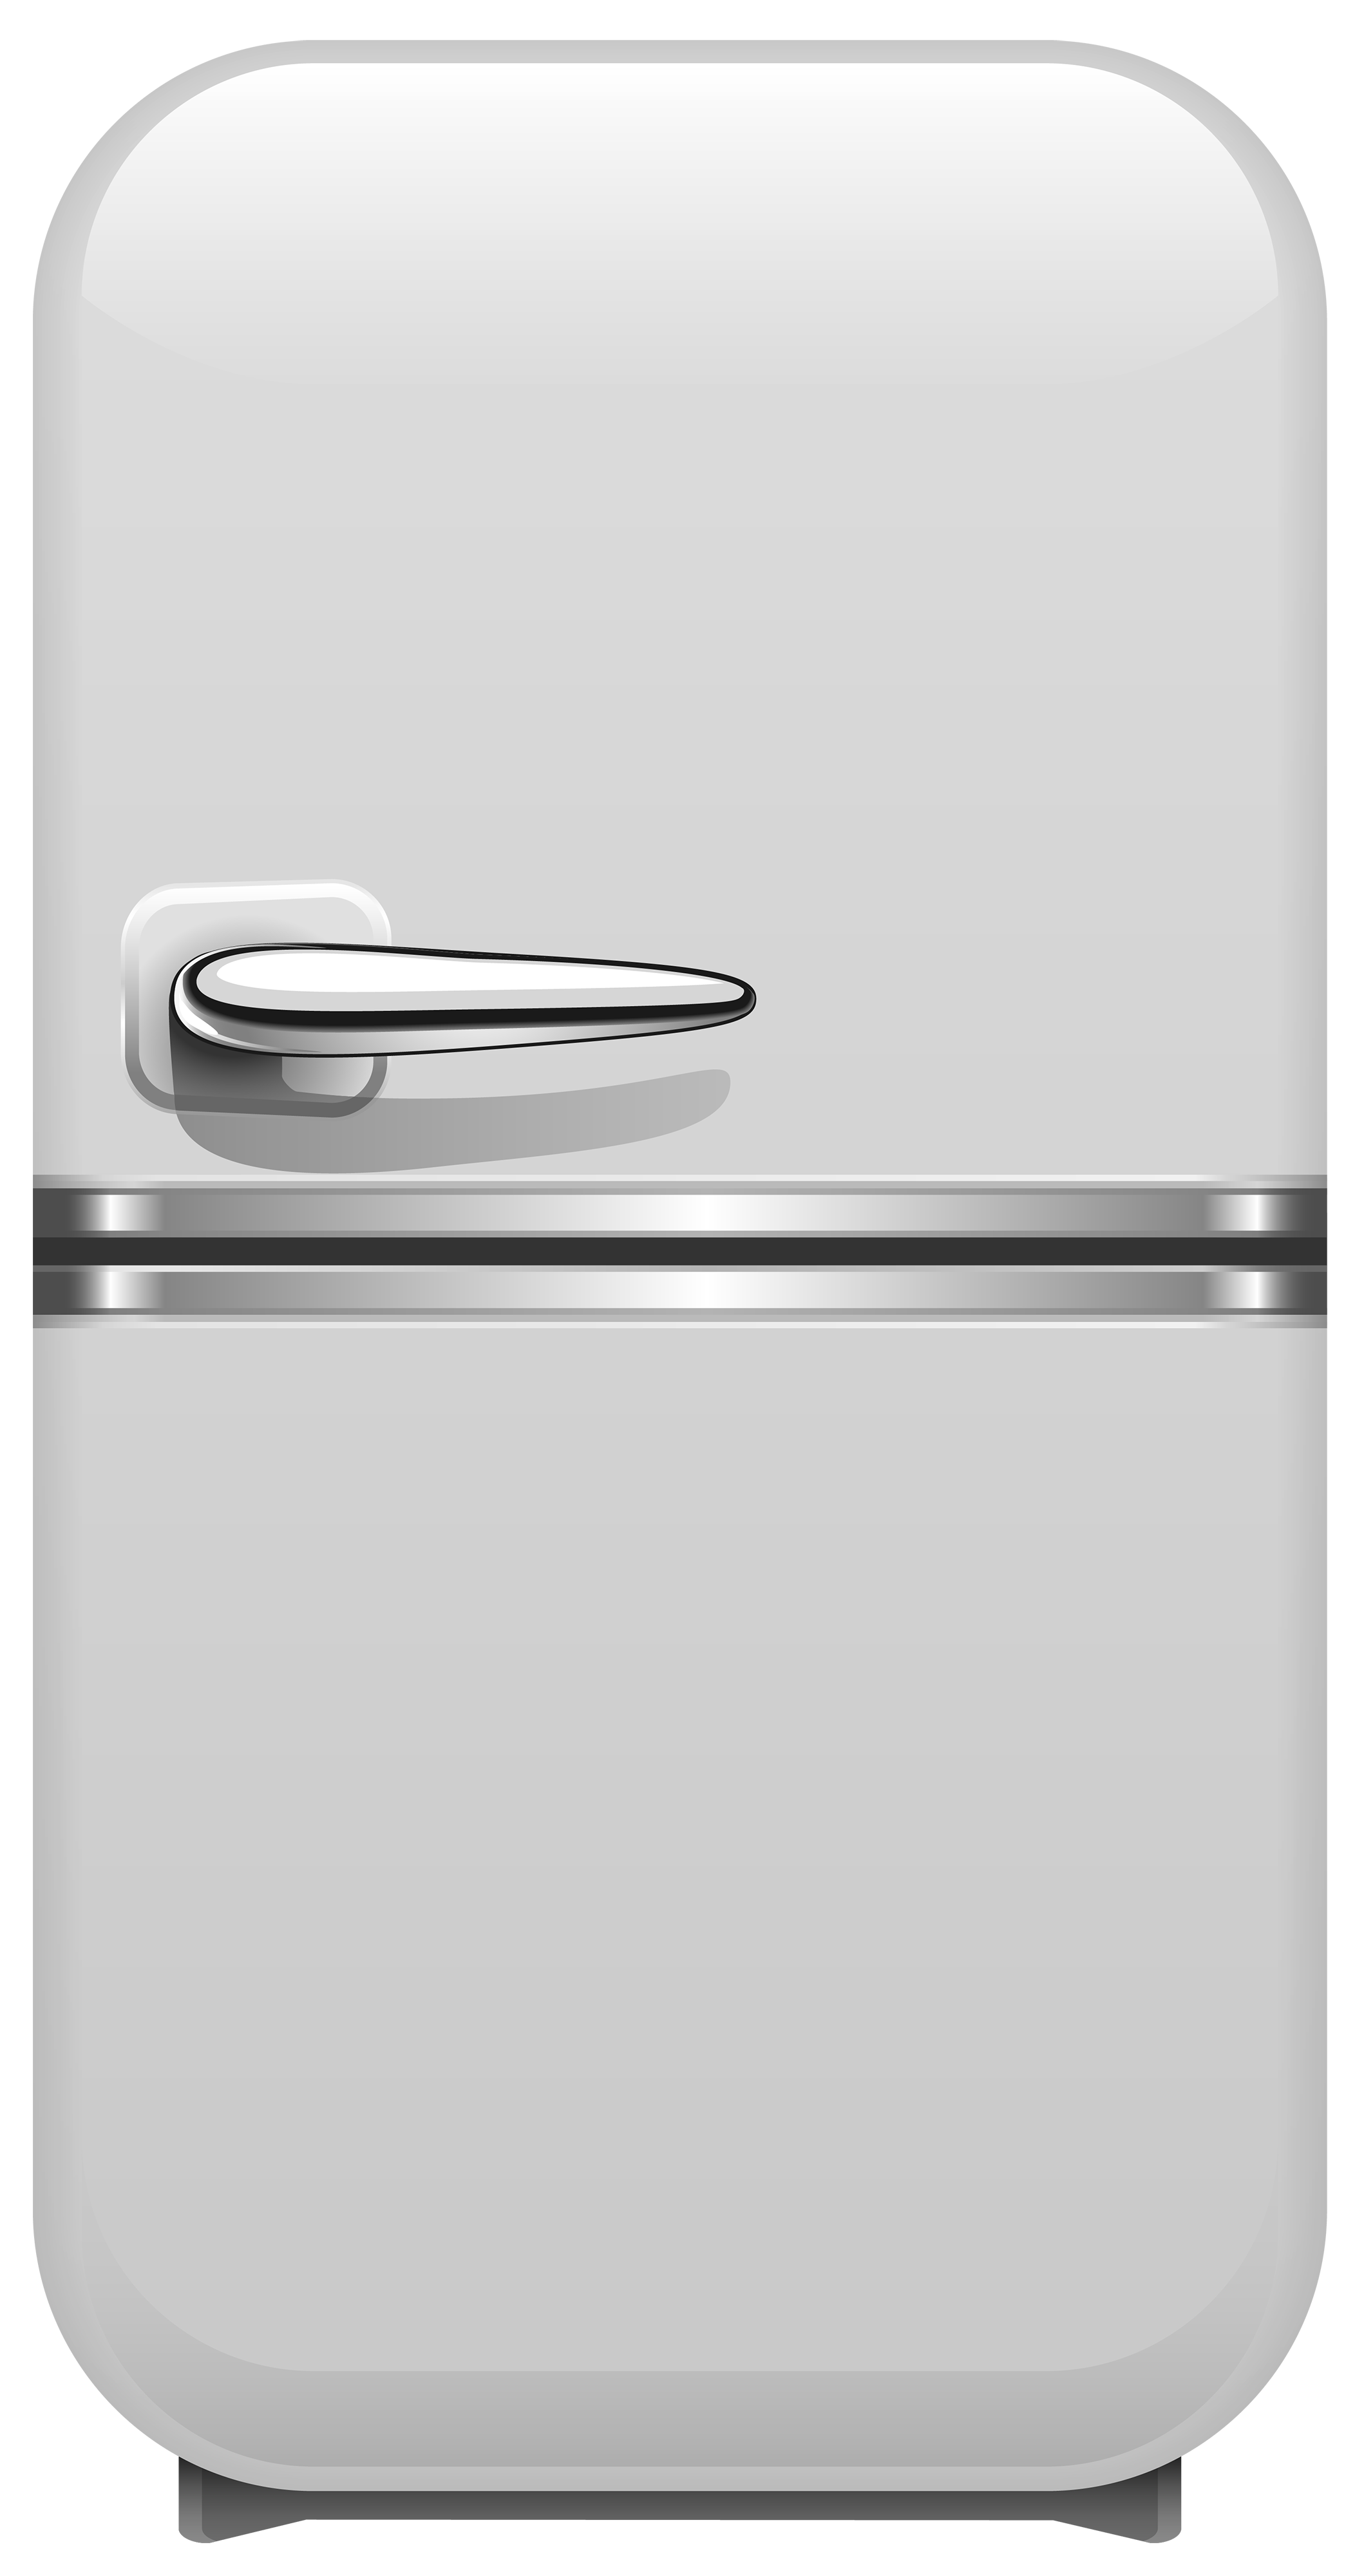 clipart of refrigerator - photo #47